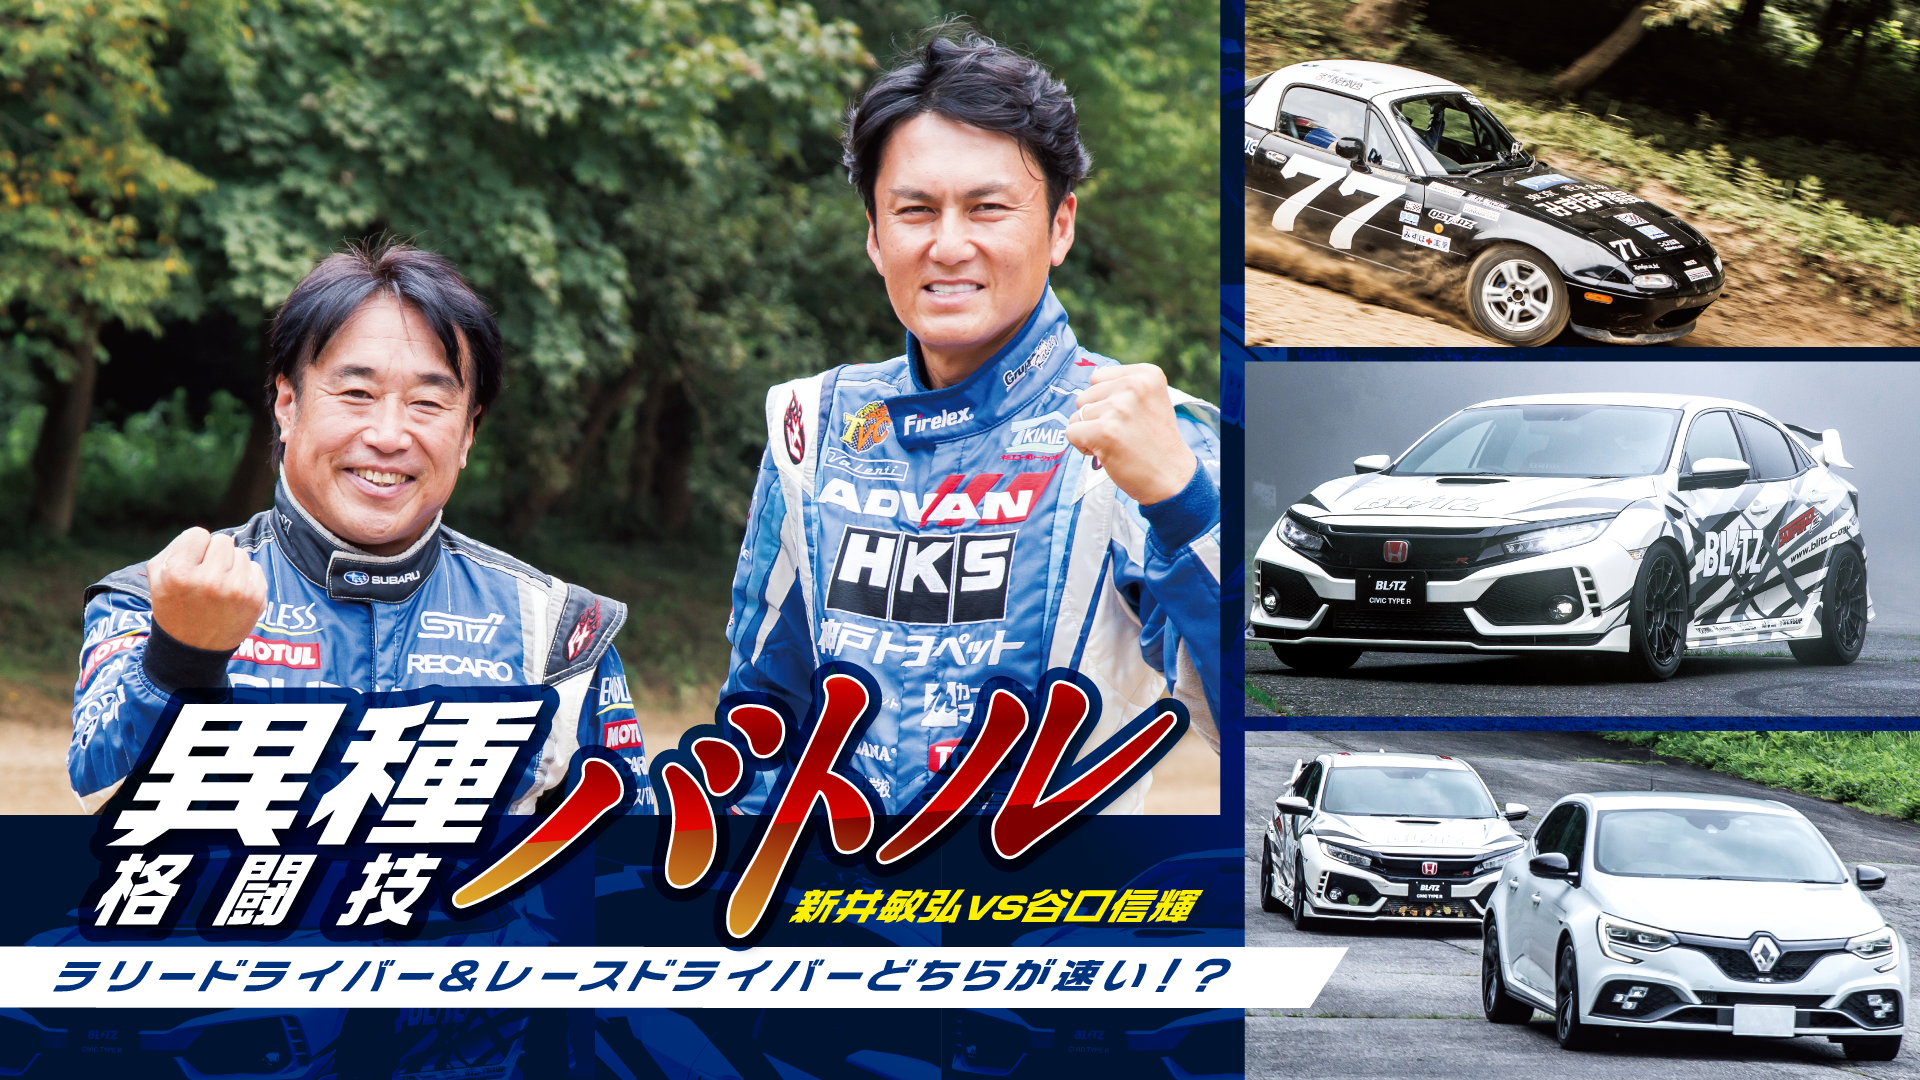 Supercar 峠 Battle vol.2(TV番組・エンタメ / 2015) - 動画配信 | U-NEXT 31日間無料トライアル